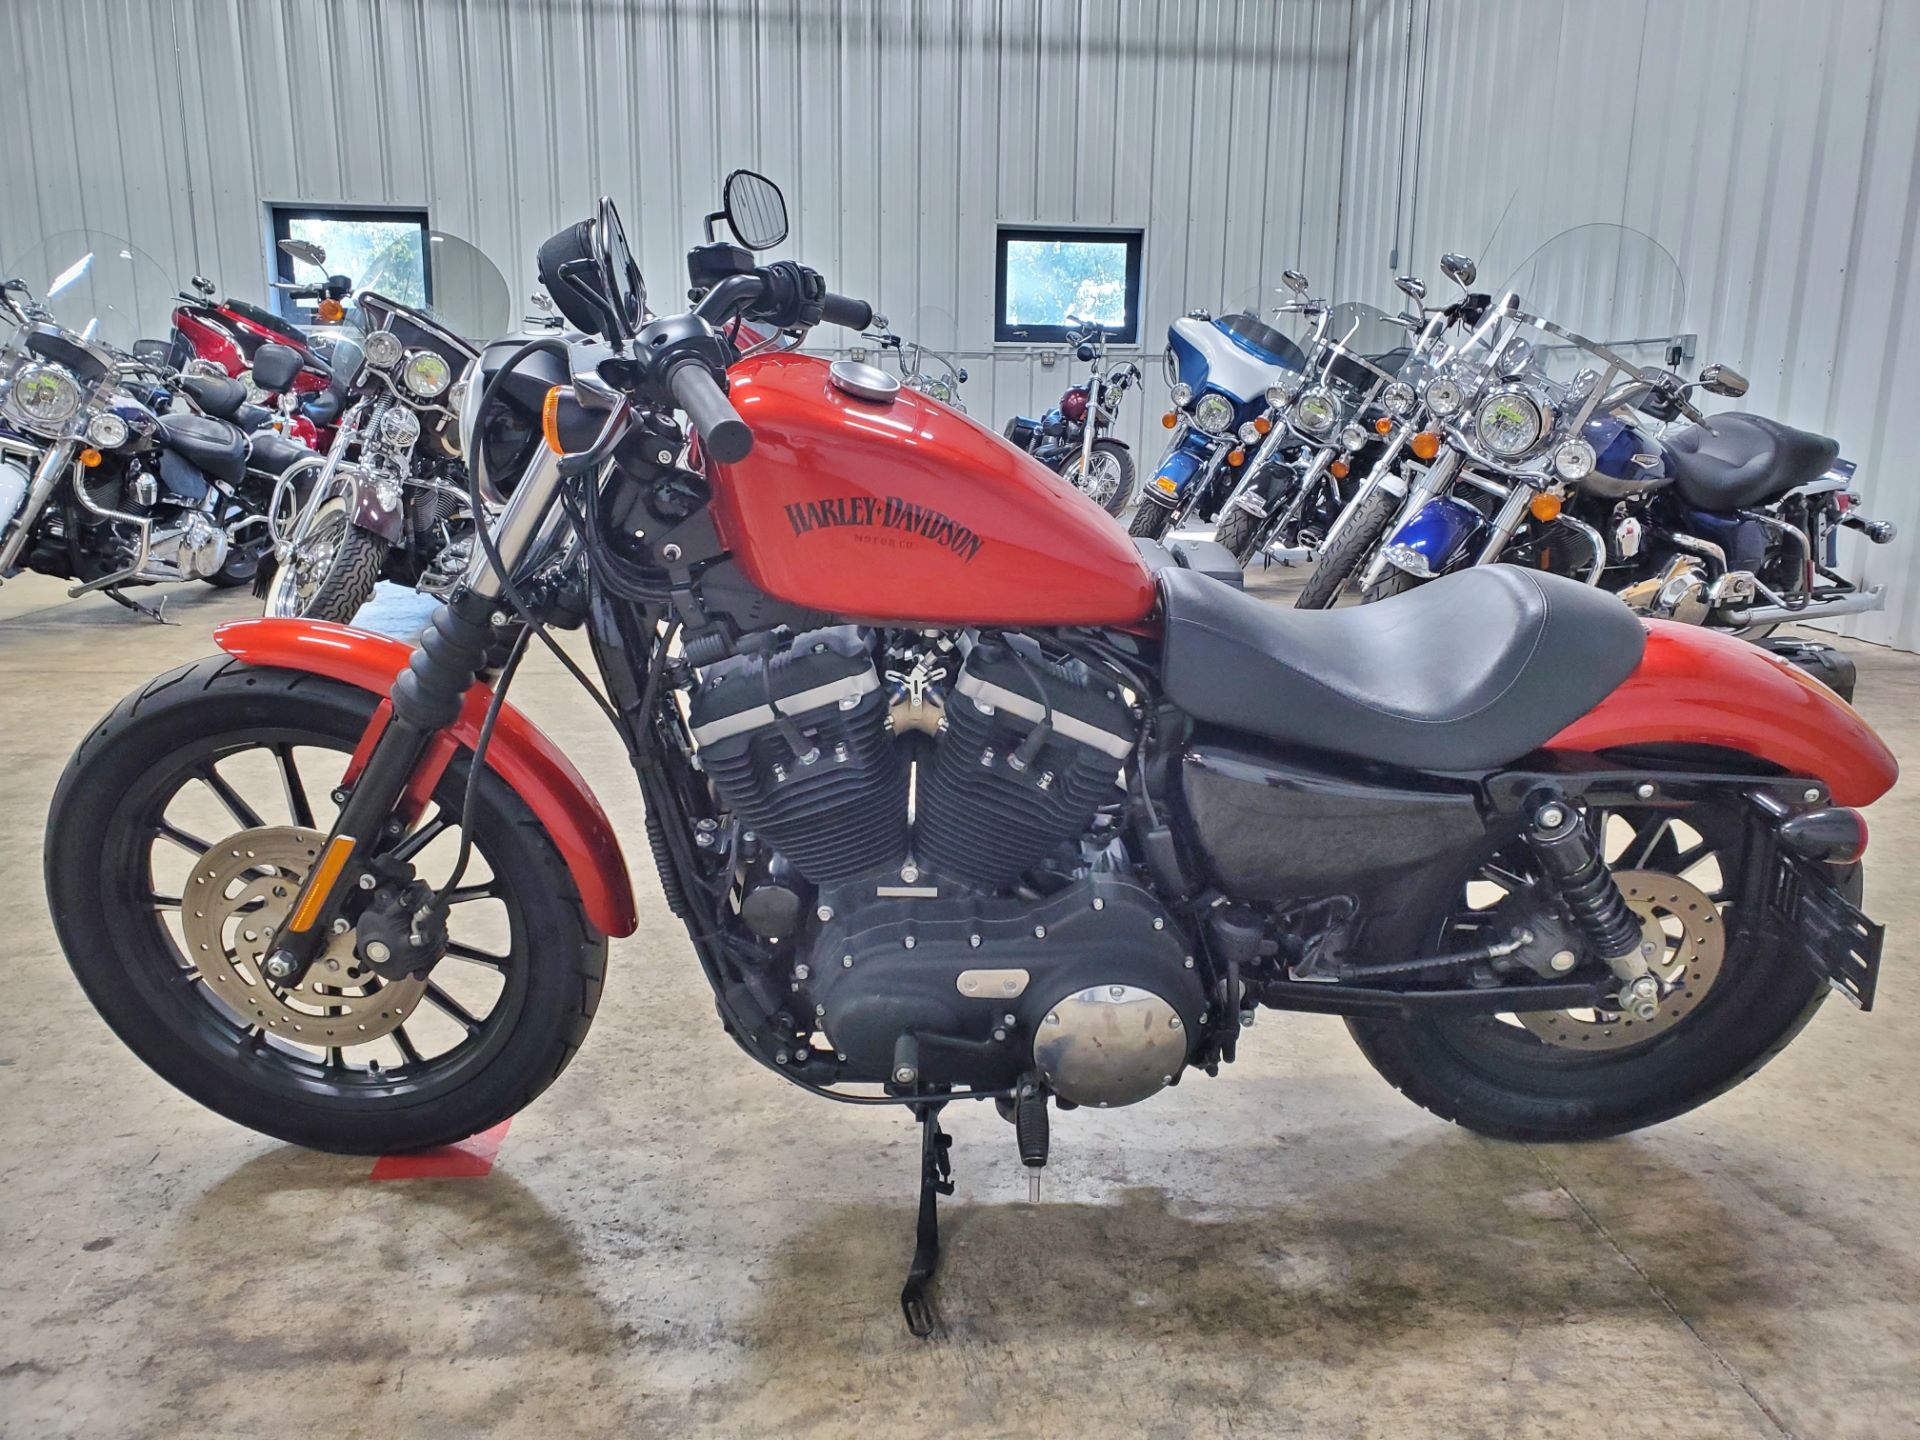 2013 Harley-Davidson Sportster® Iron 883™ in Sandusky, Ohio - Photo 6